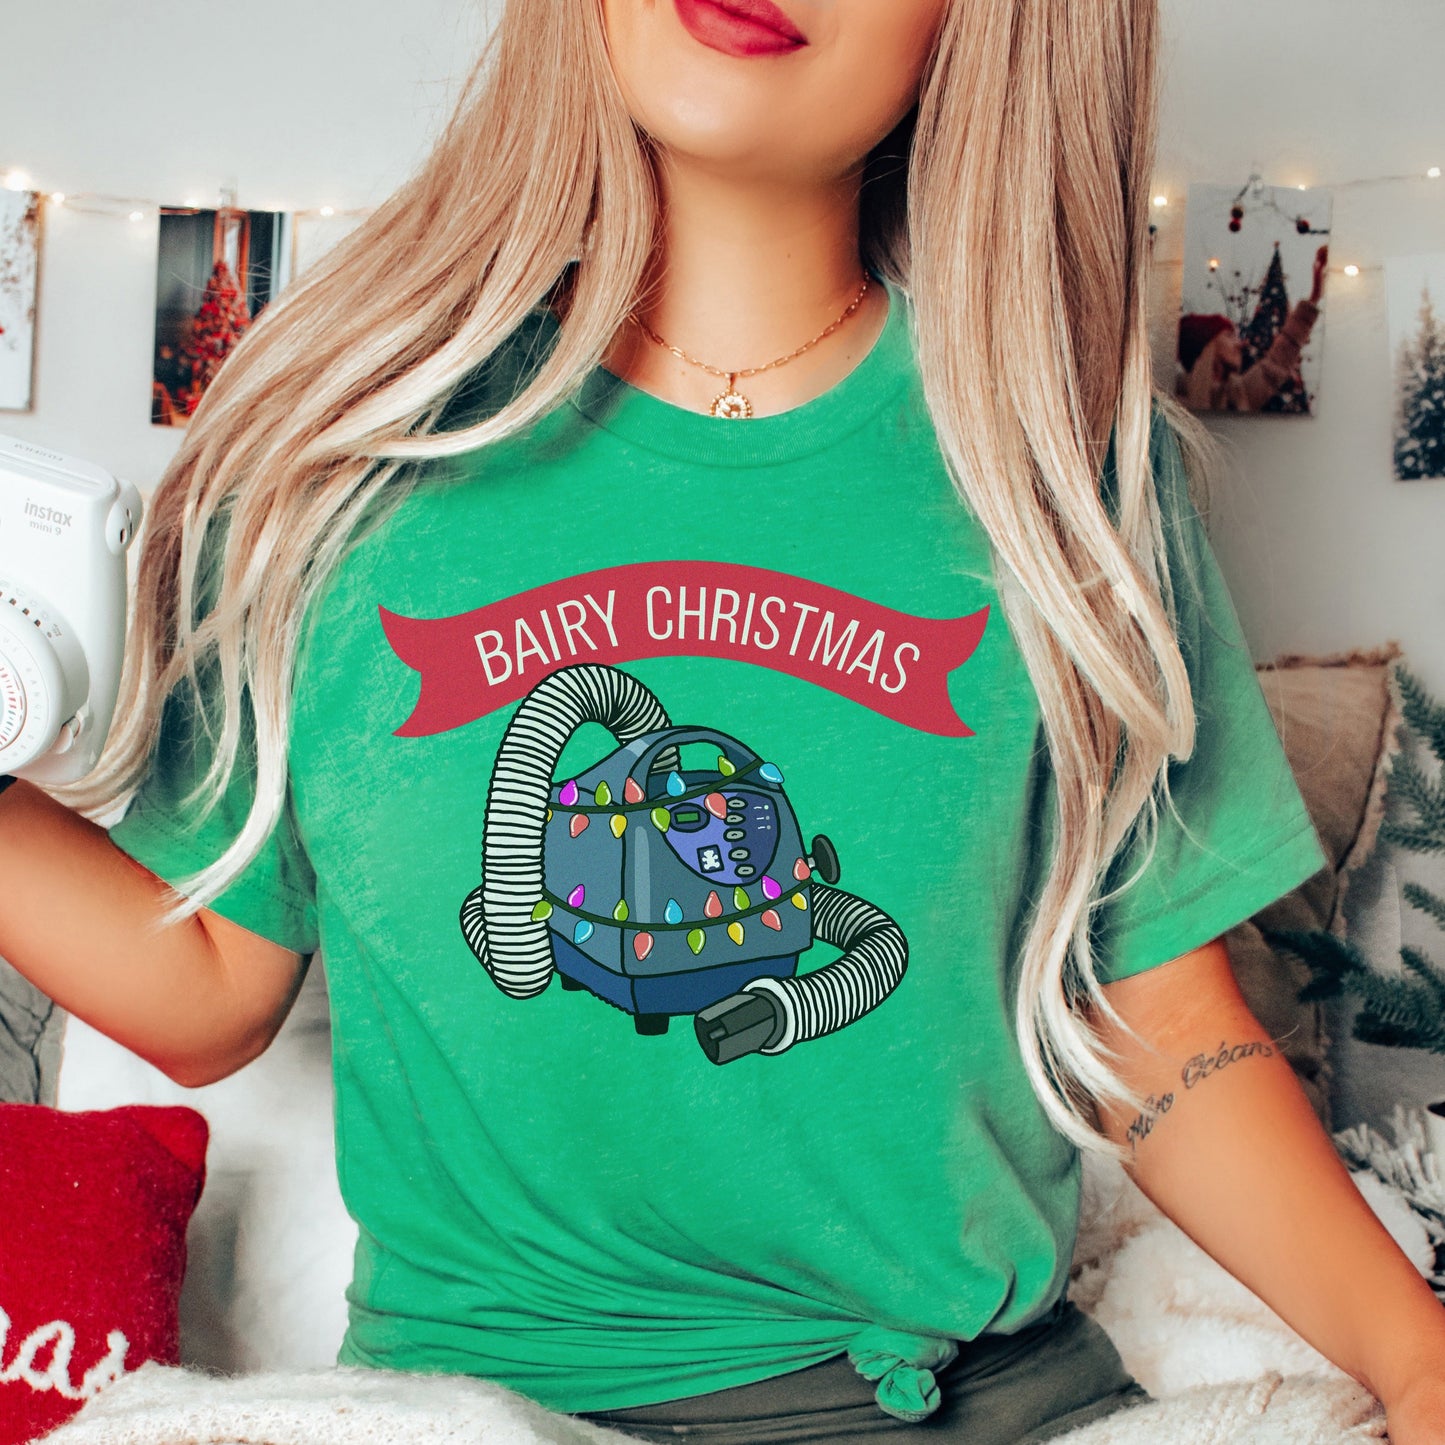 Bairy Christmas T-Shirt